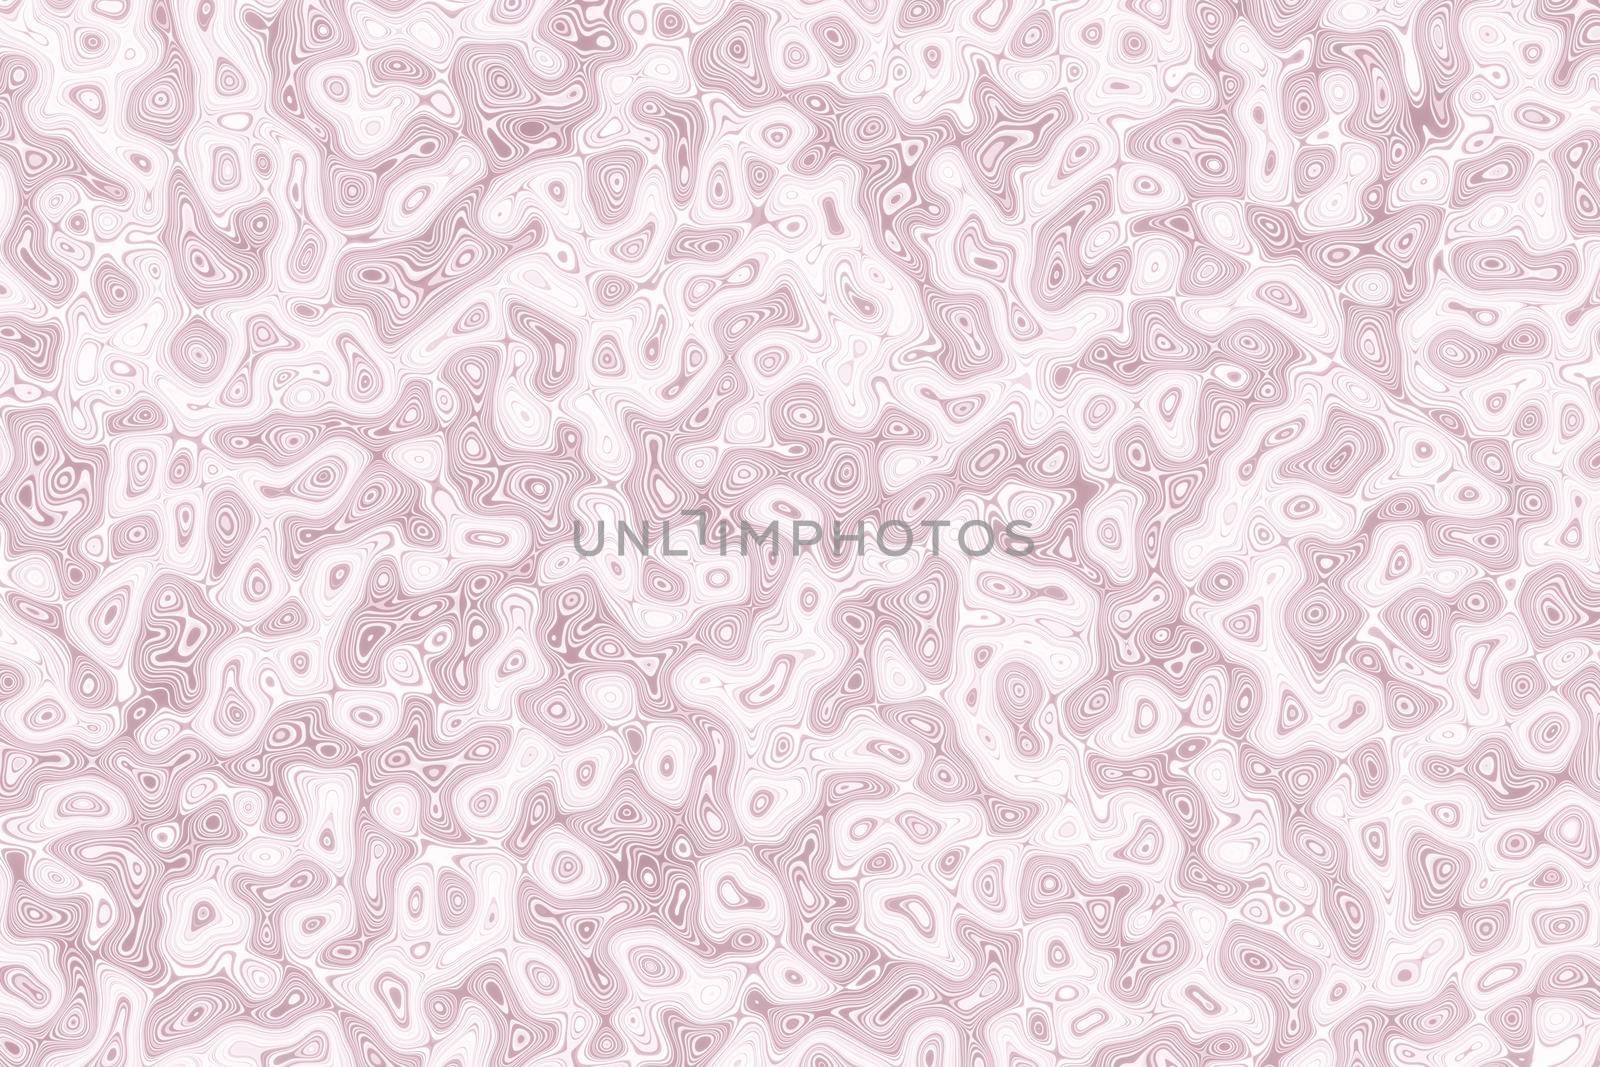 Surreal psycho jelly organism skin seamless seamless wallpaper. by raferto1973